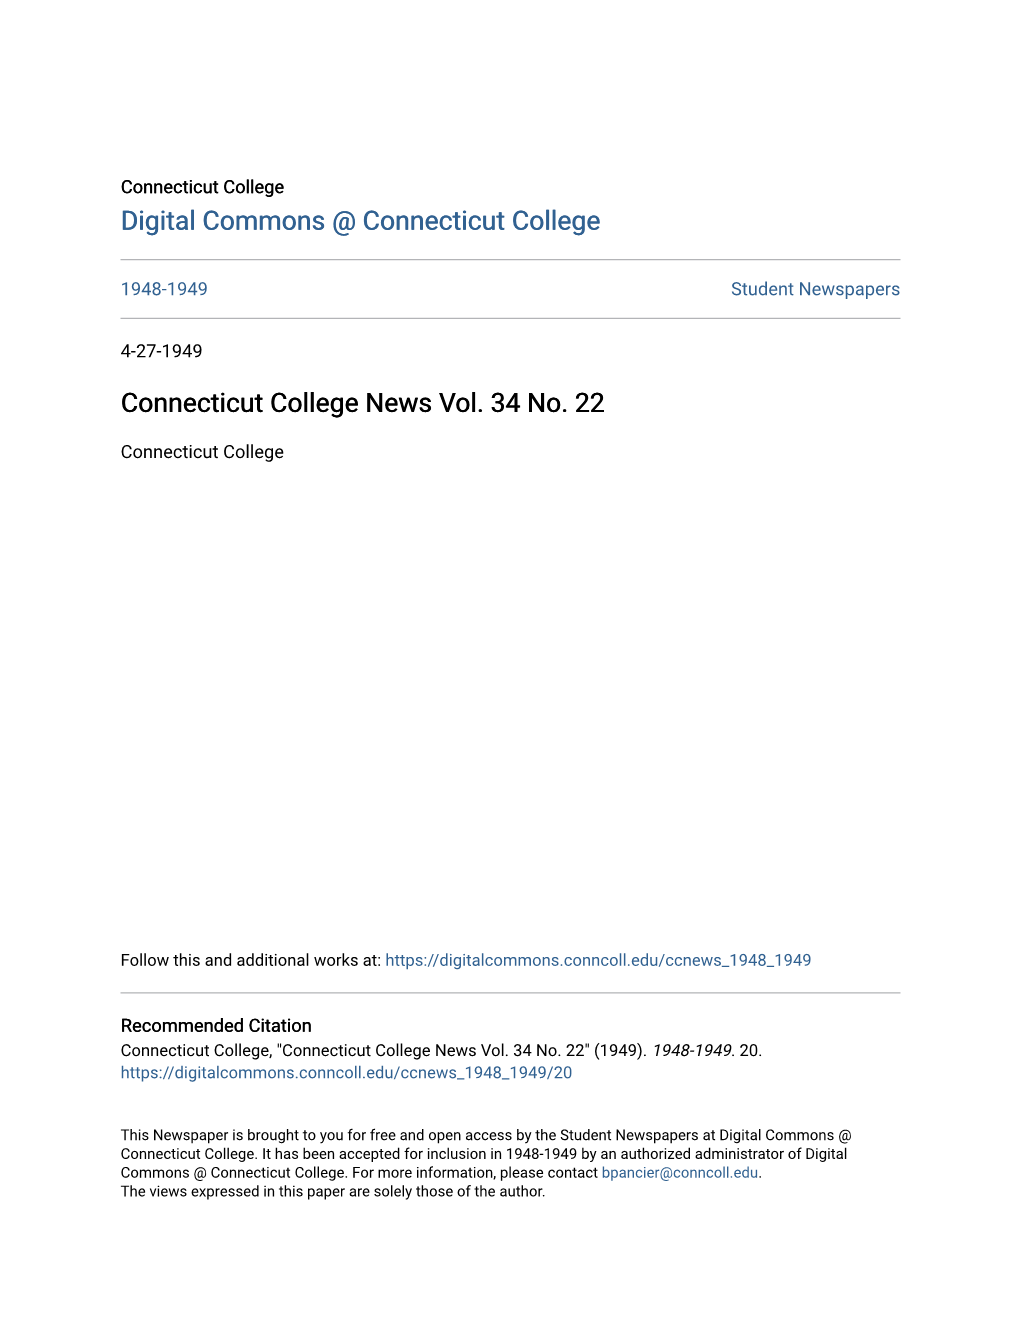 Connecticut College News Vol. 34 No. 22